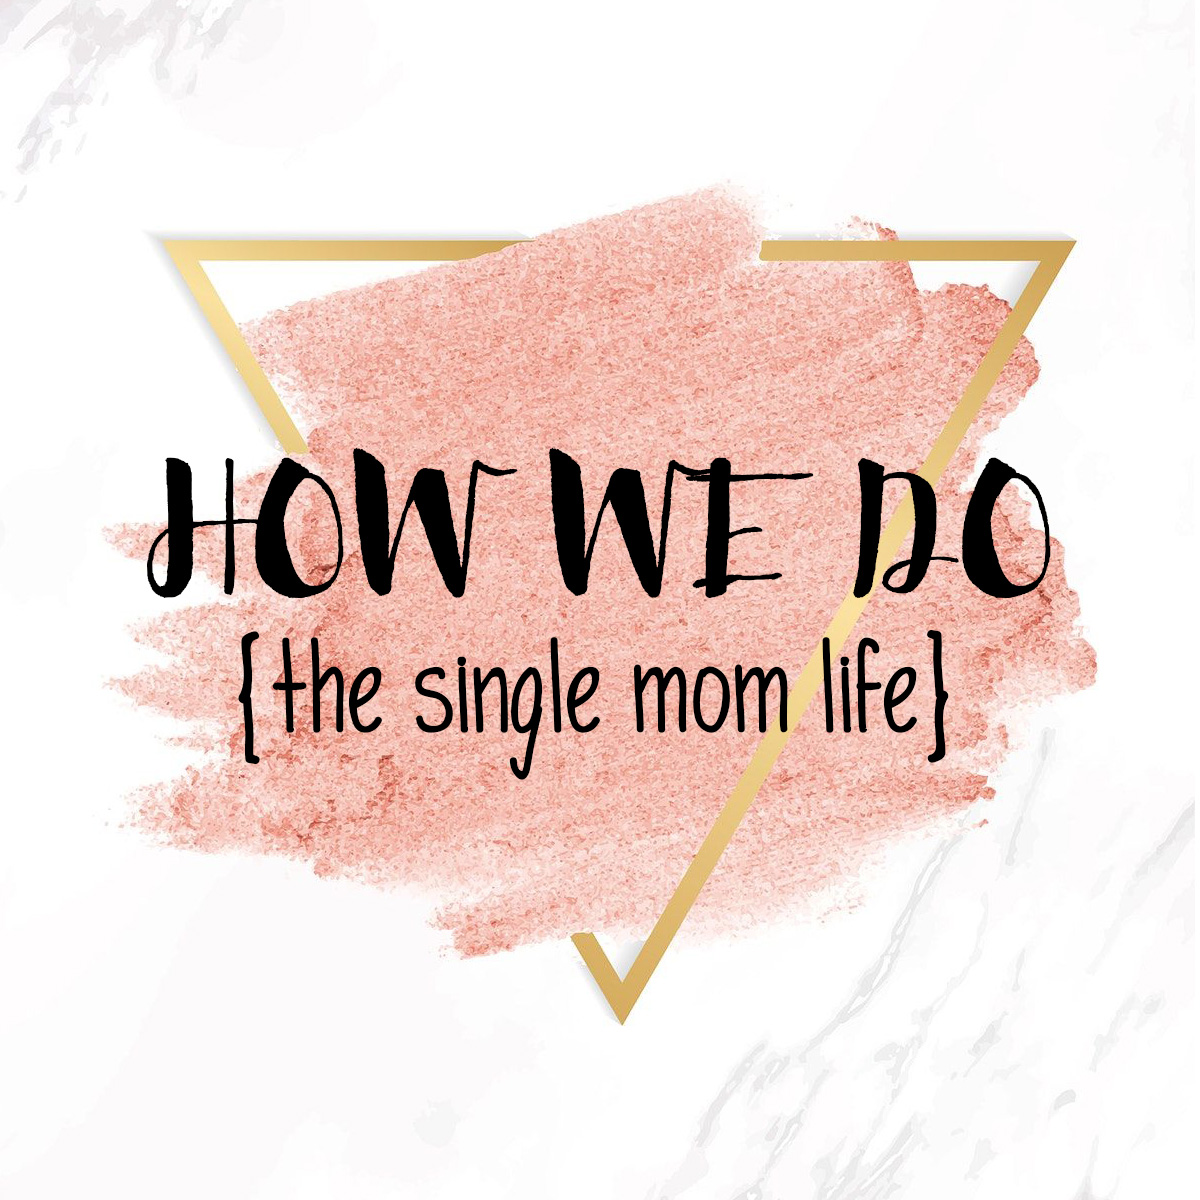 HOW WE DO - the single mom life